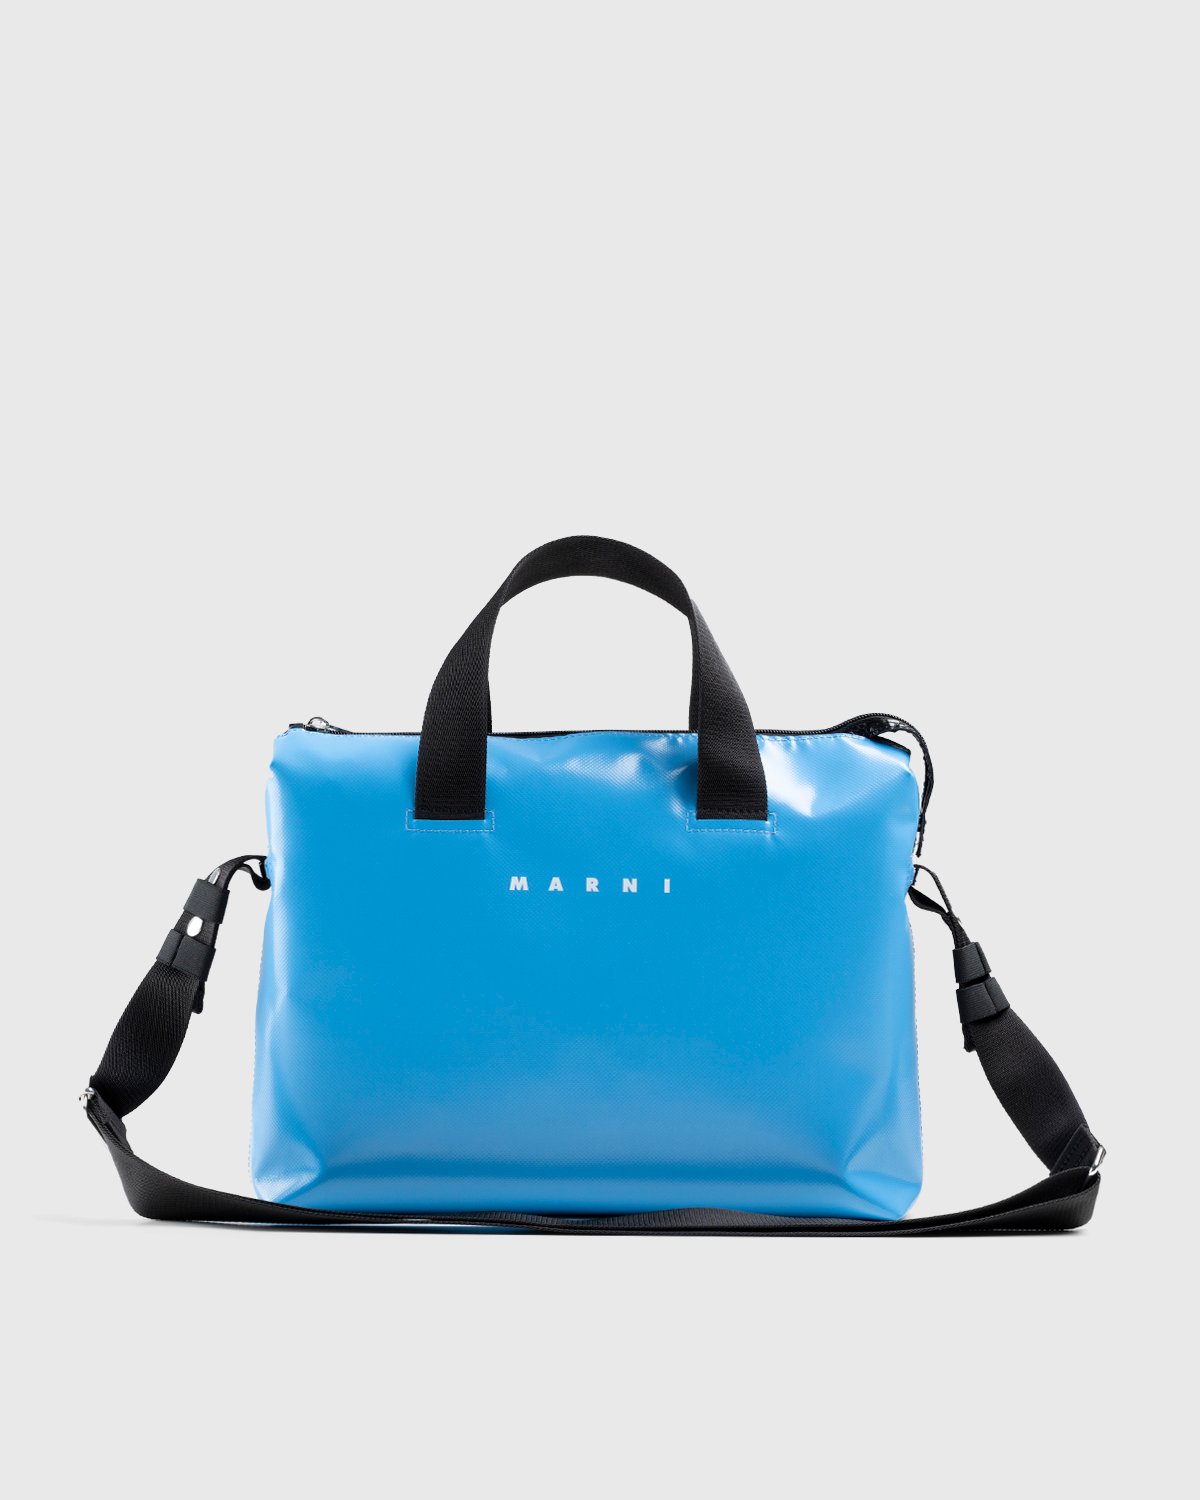 Marni - Bi-Colored PVC Tribeca Bag Blue Brown - Accessories - Blue - Image 1